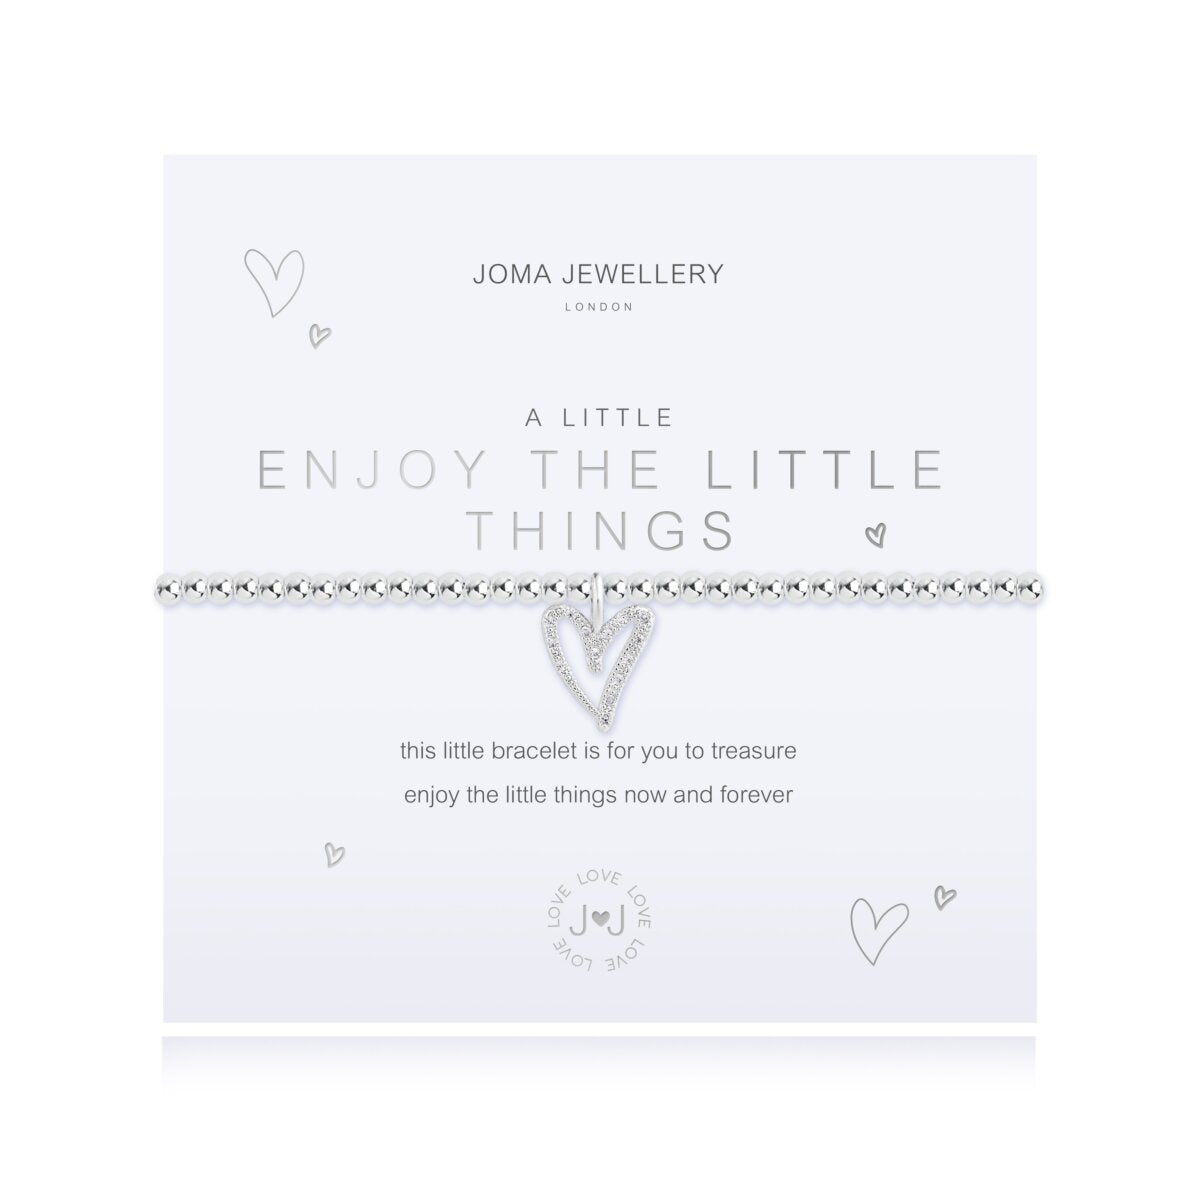 Joma Jewellery 'A Little' Enjoy The Little Things